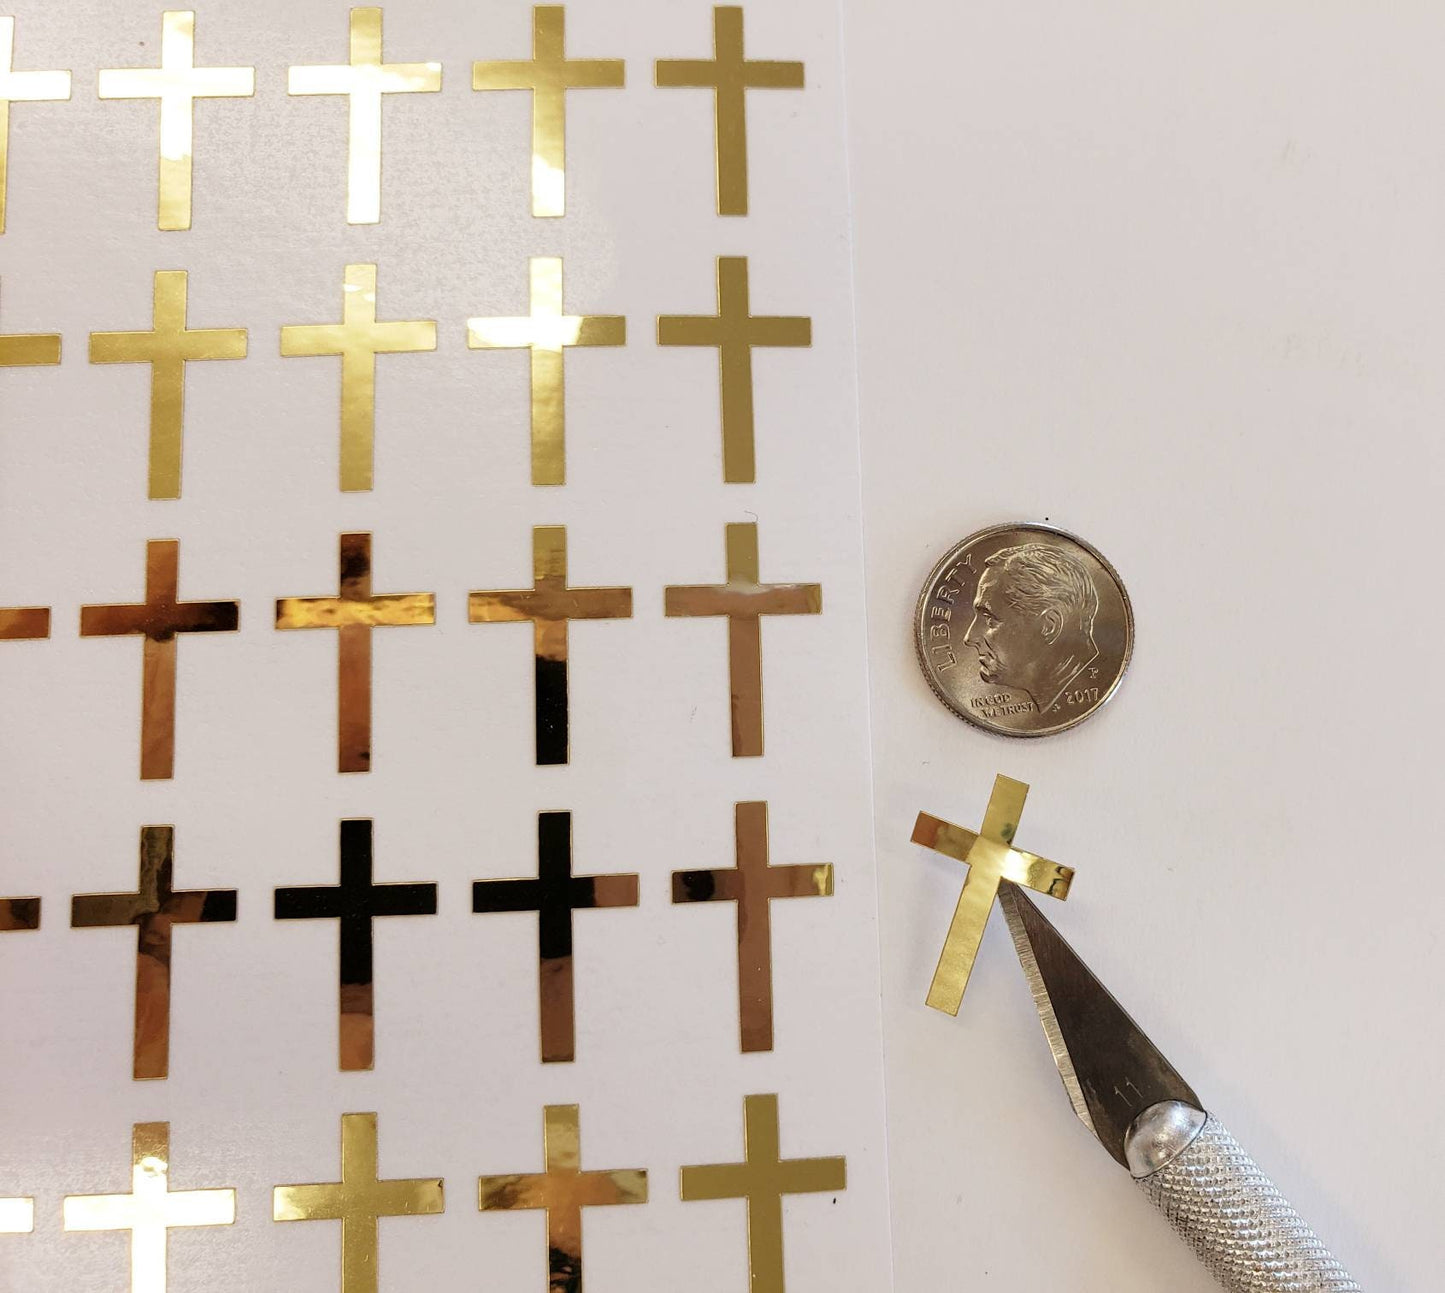 Gold Religious Cross Stickers, Gold Metallic Vinyl Decals, Small